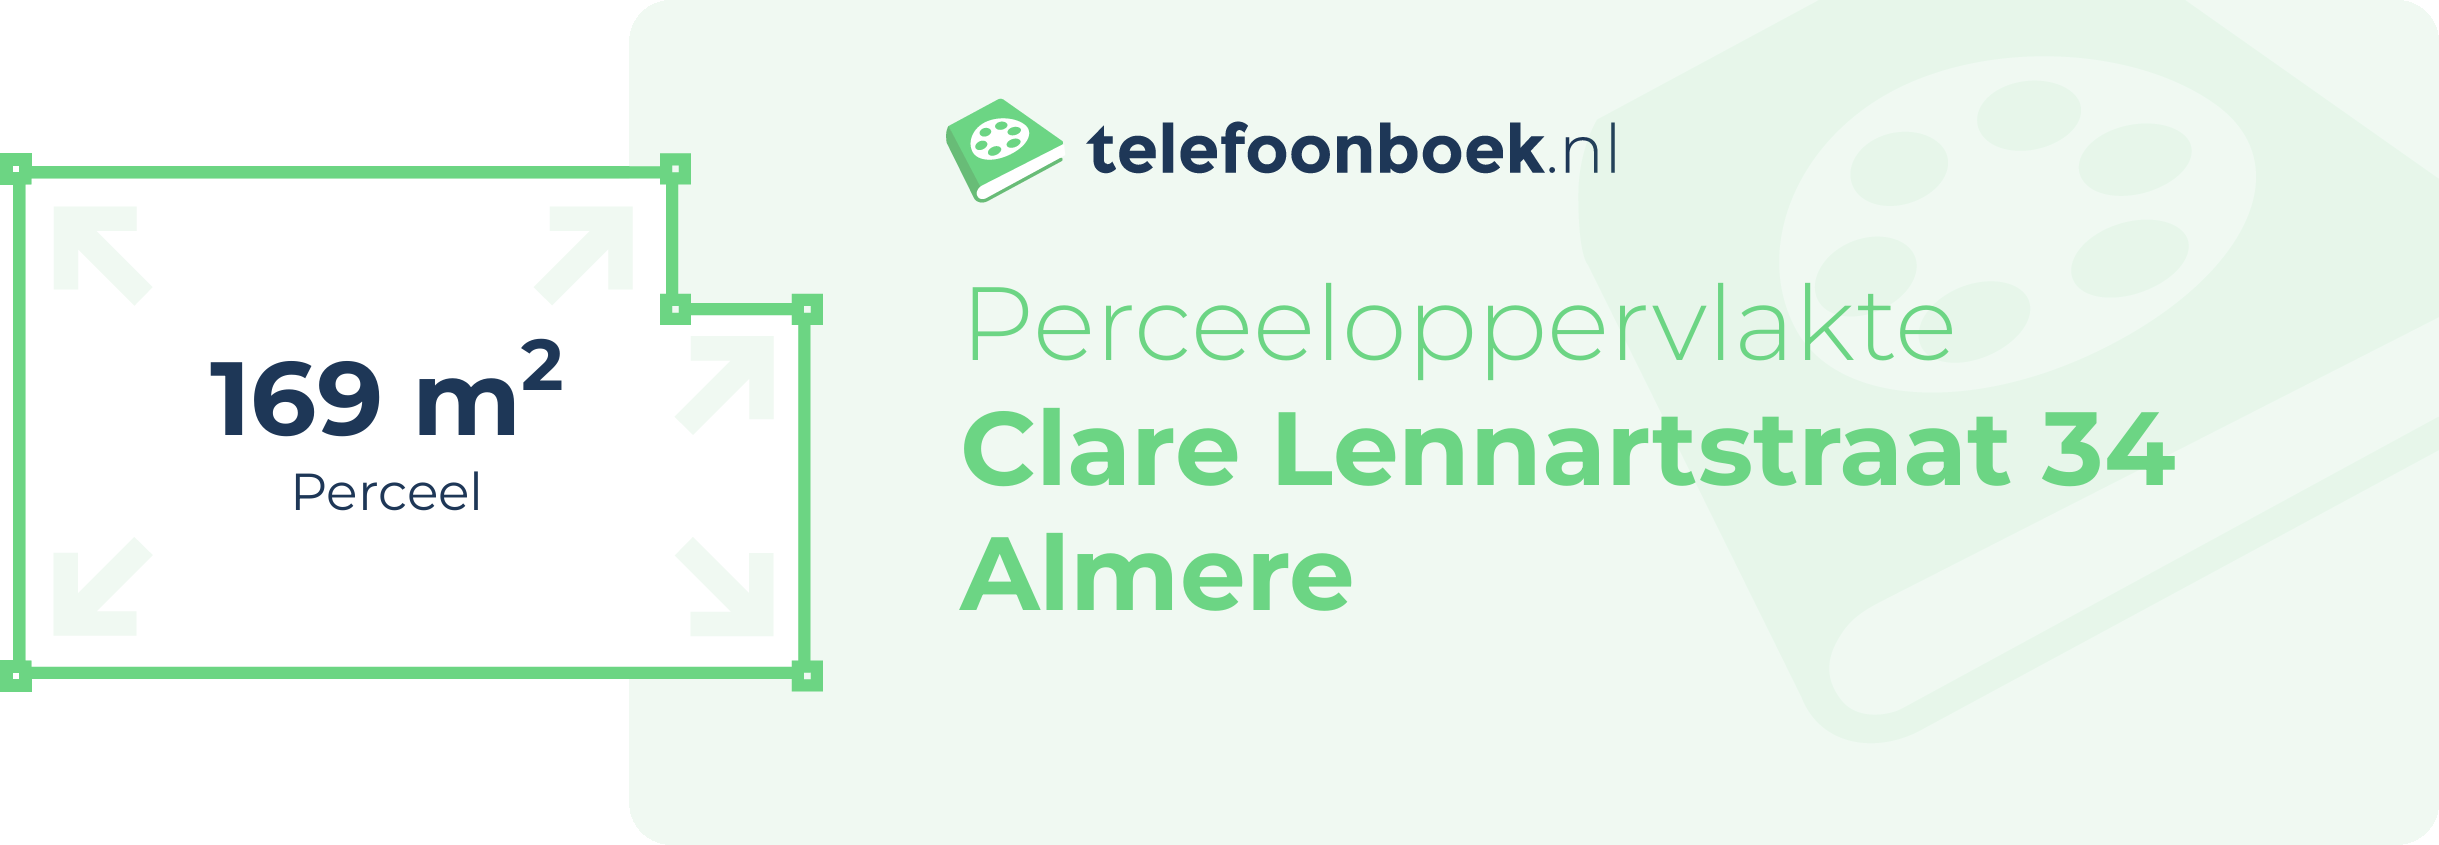 Perceeloppervlakte Clare Lennartstraat 34 Almere